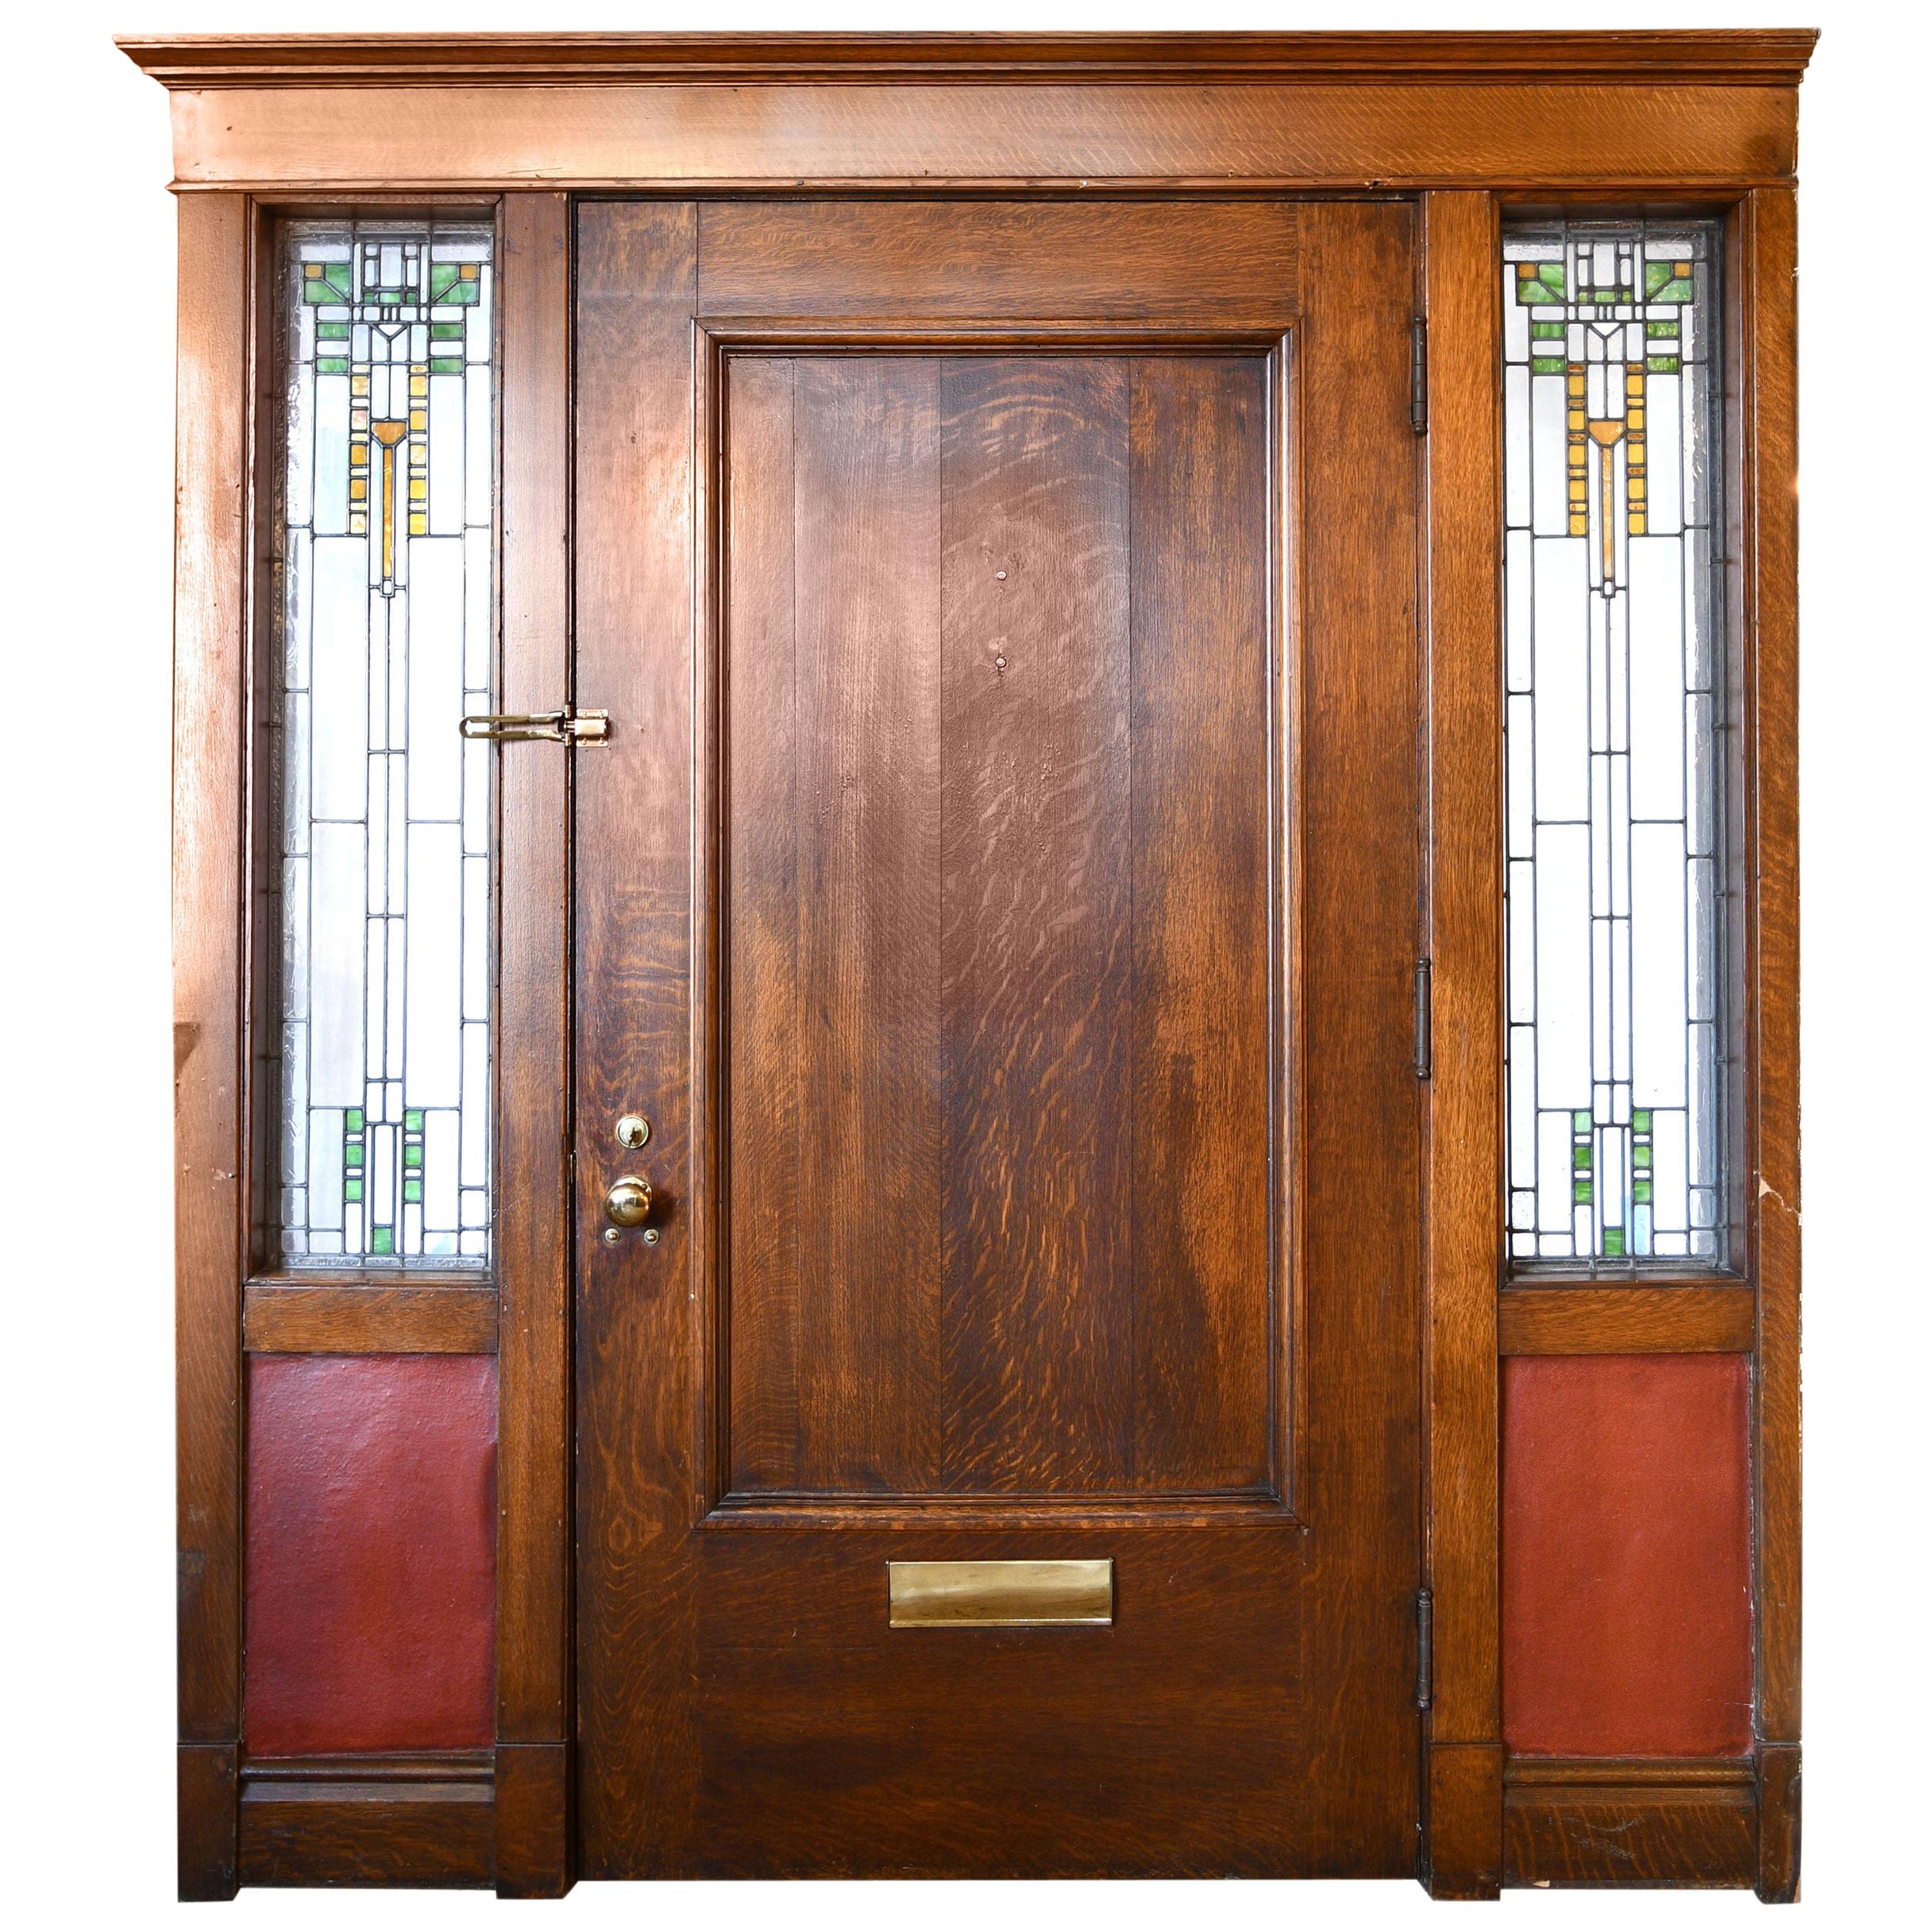 Quartersawn Oak Entry Door with Arts & Crafts Sidelite Windows